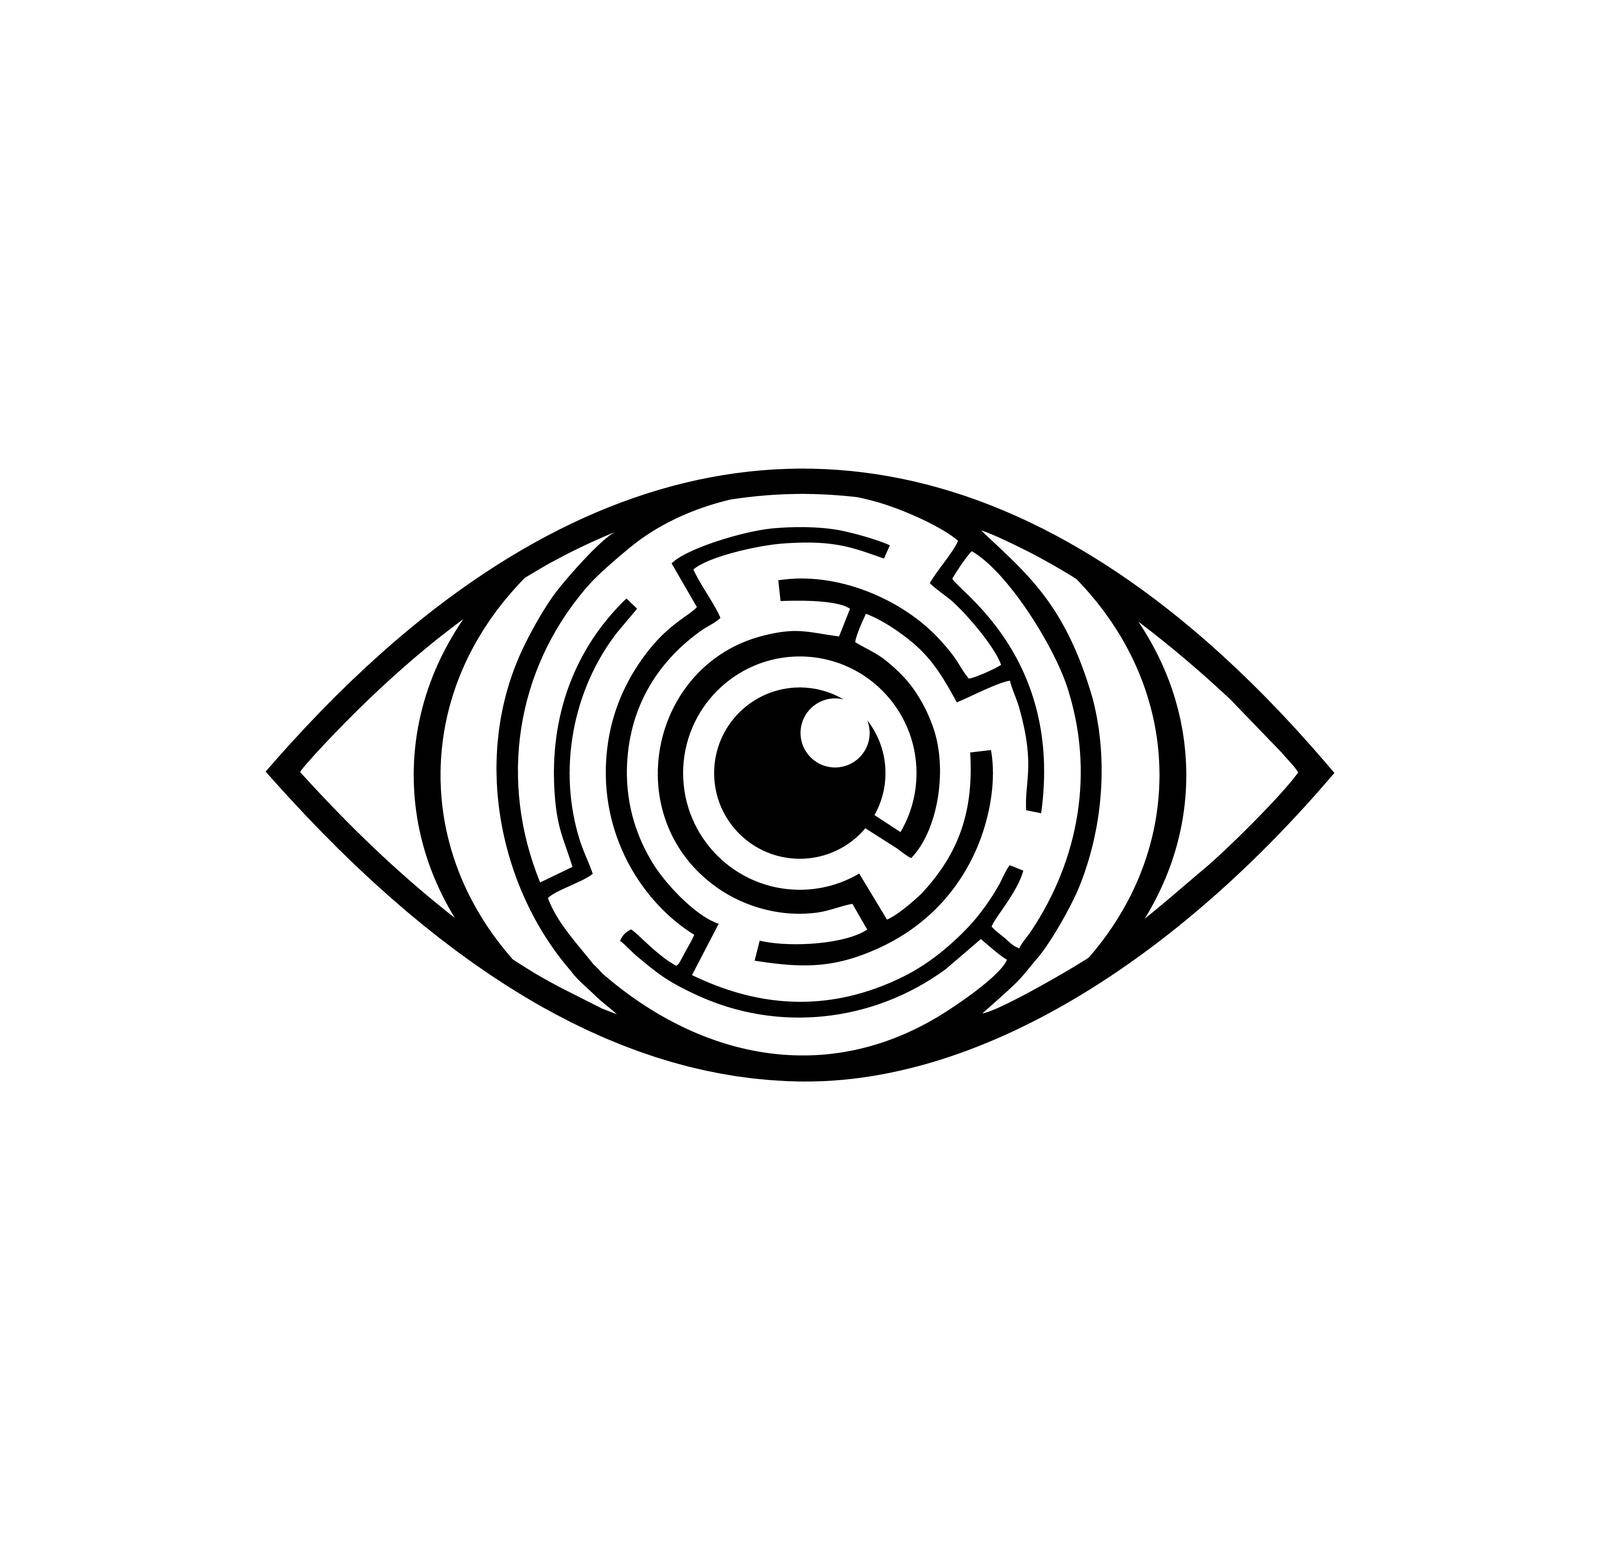 Iris Labyrinth Eye Logo Sign by Up2date